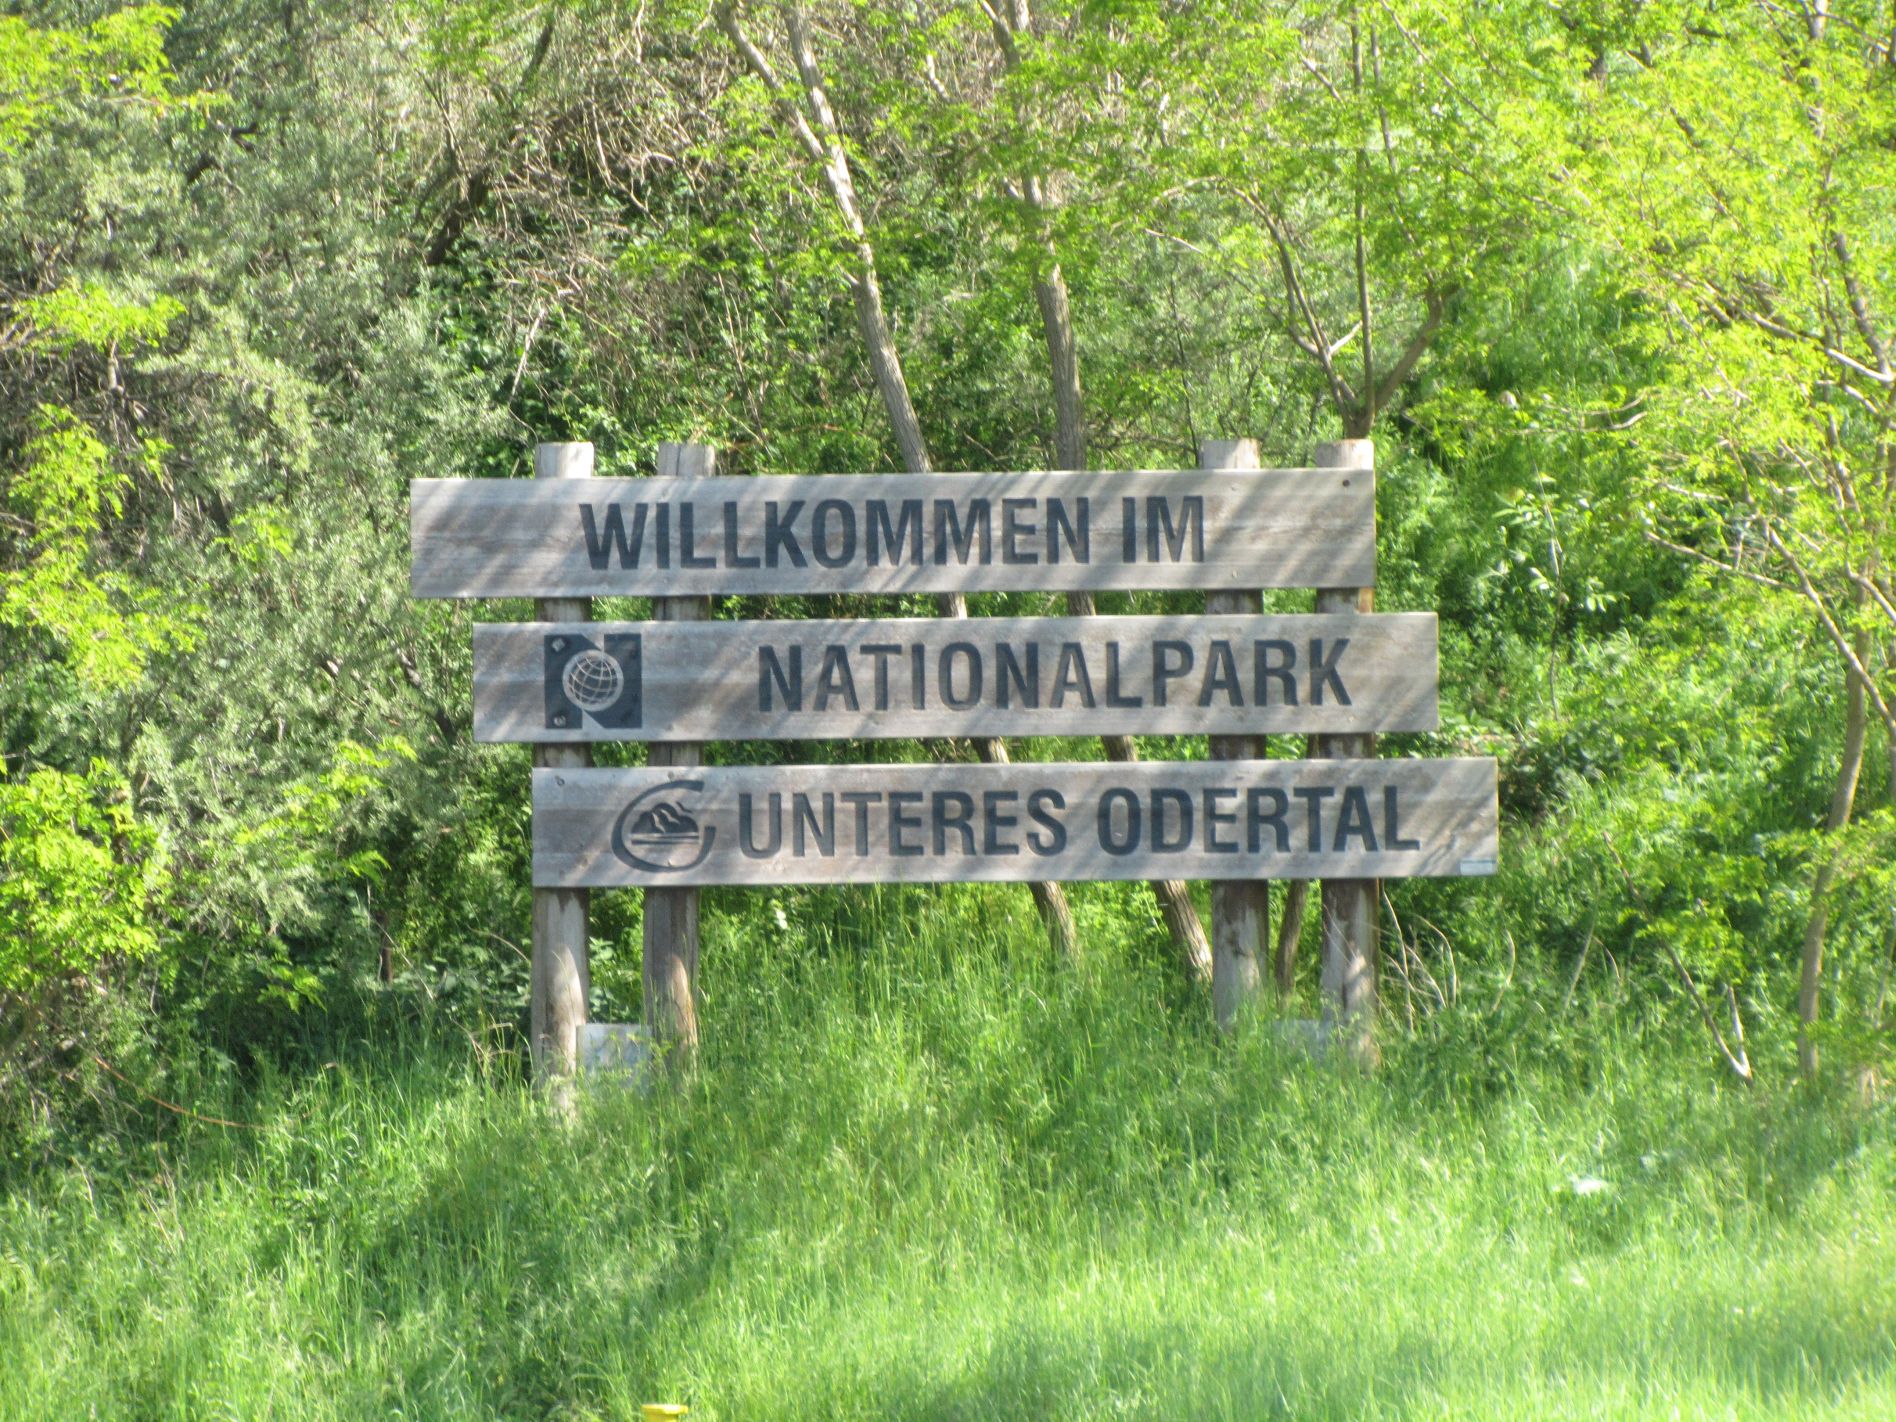 Nationalpark Unteres Odertal